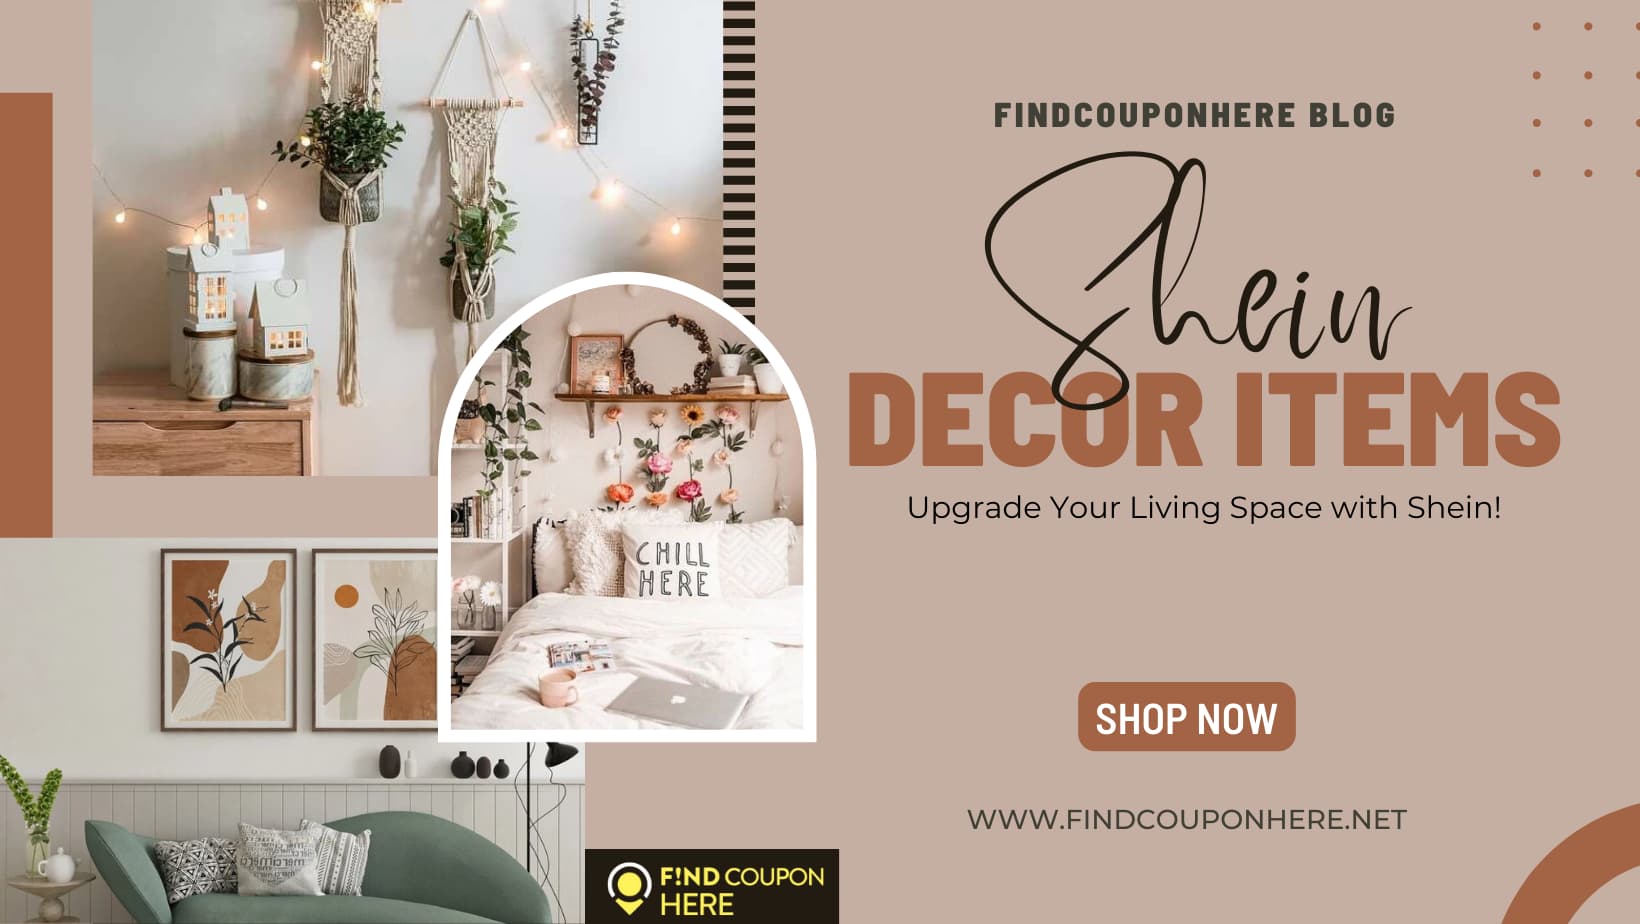 Make SHEIN Home Decor Ideas Come True With SHEIN Cute Home Items